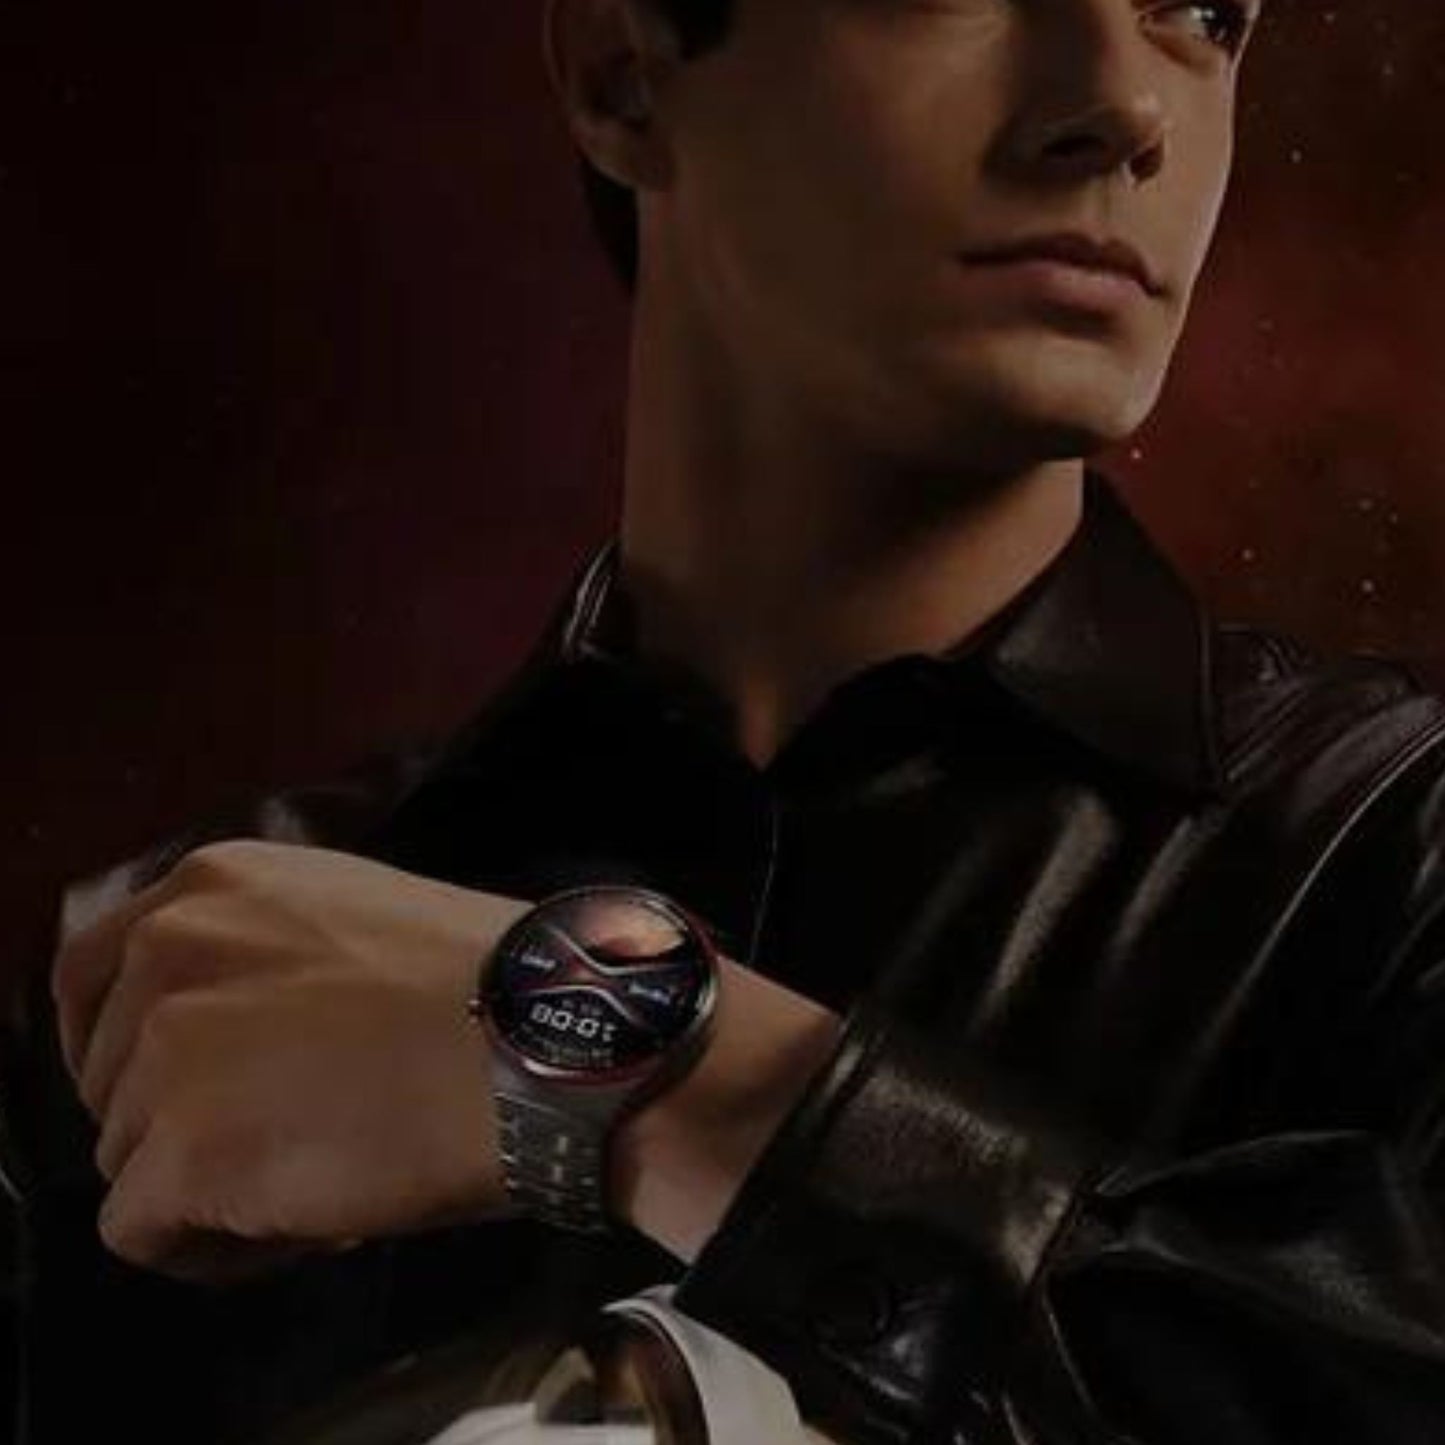 Haino Teko RW-32 Watch 4 Pro SpaceX CURVED Glass Smartwatch with 3 pair straps-Black